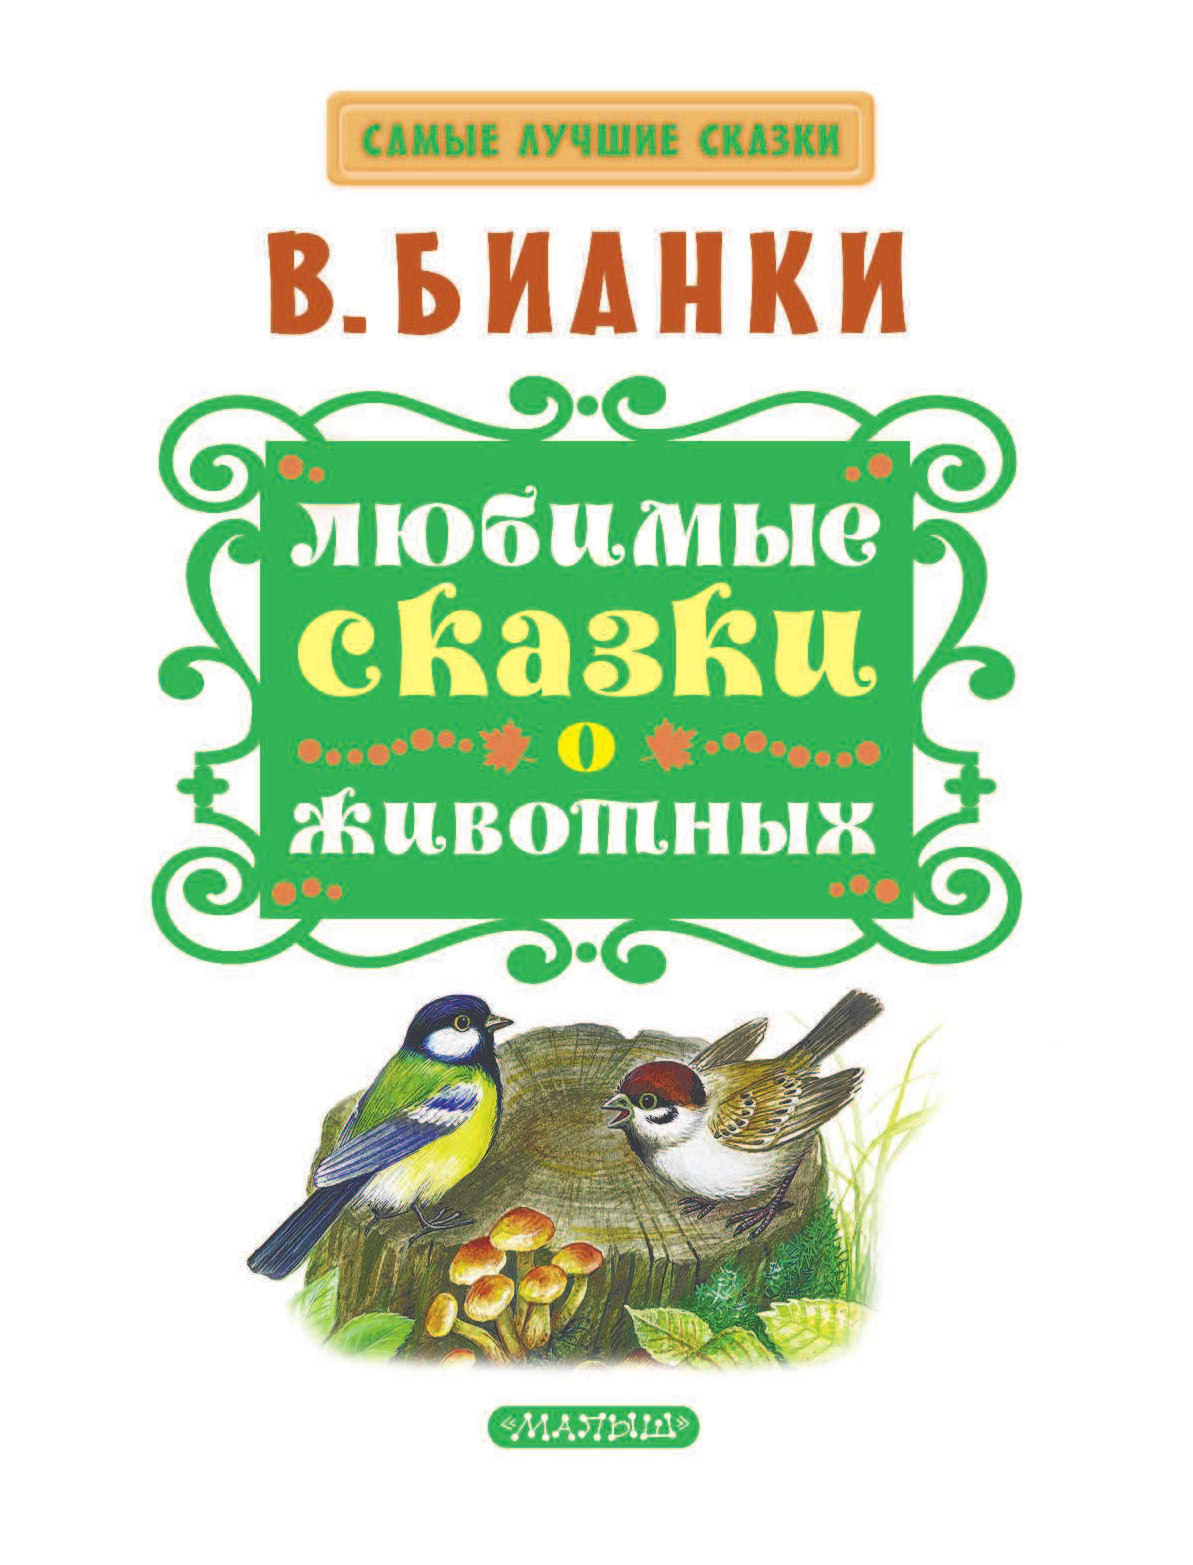 1 произведение бианки. Сказки Виталия Бианки о животных книжка.